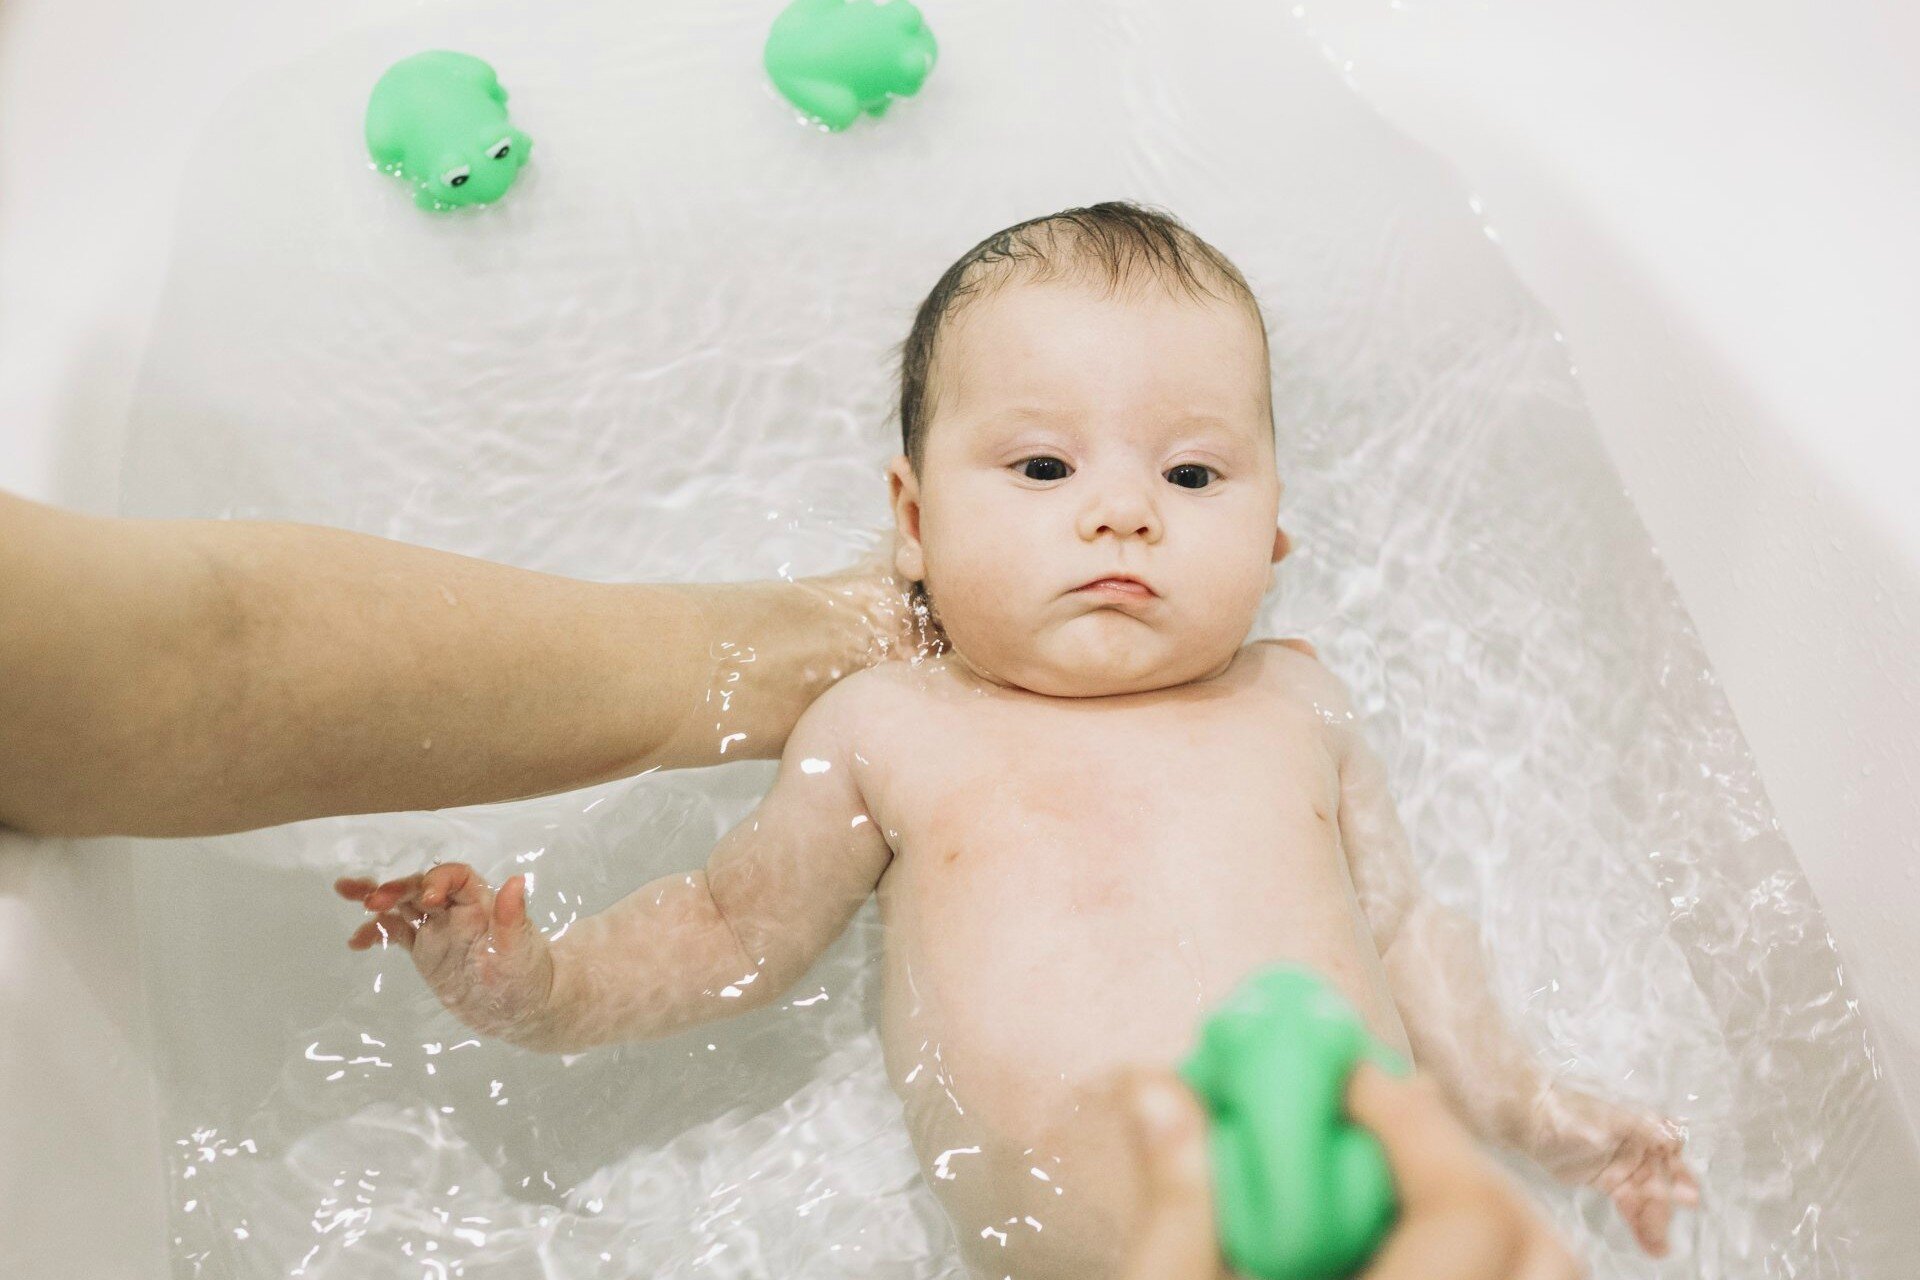 10 Best Baby Sponge Choices For A Sponge Bath